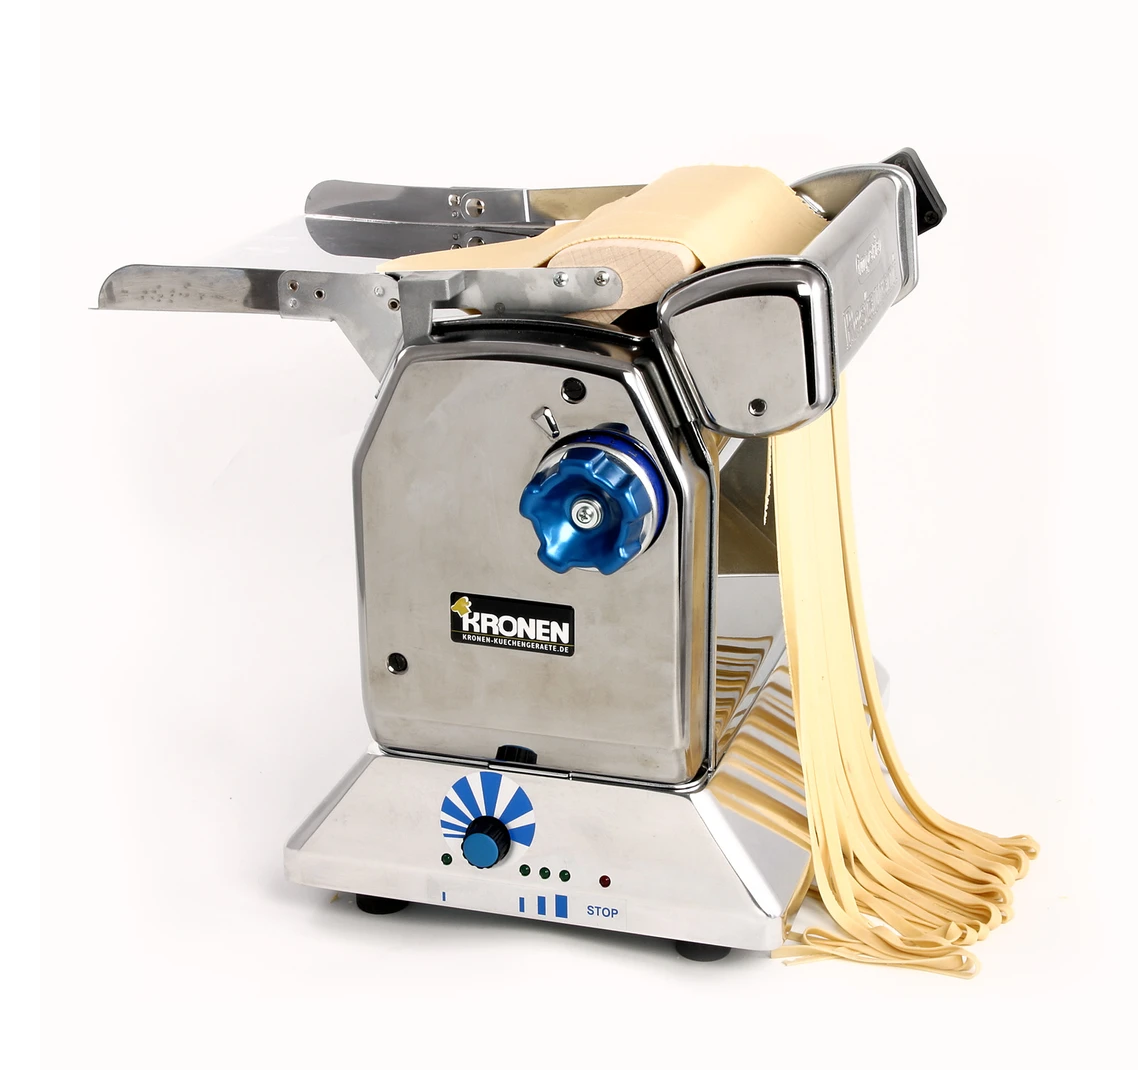 Kronen RME 220 Electric Pasta Machine